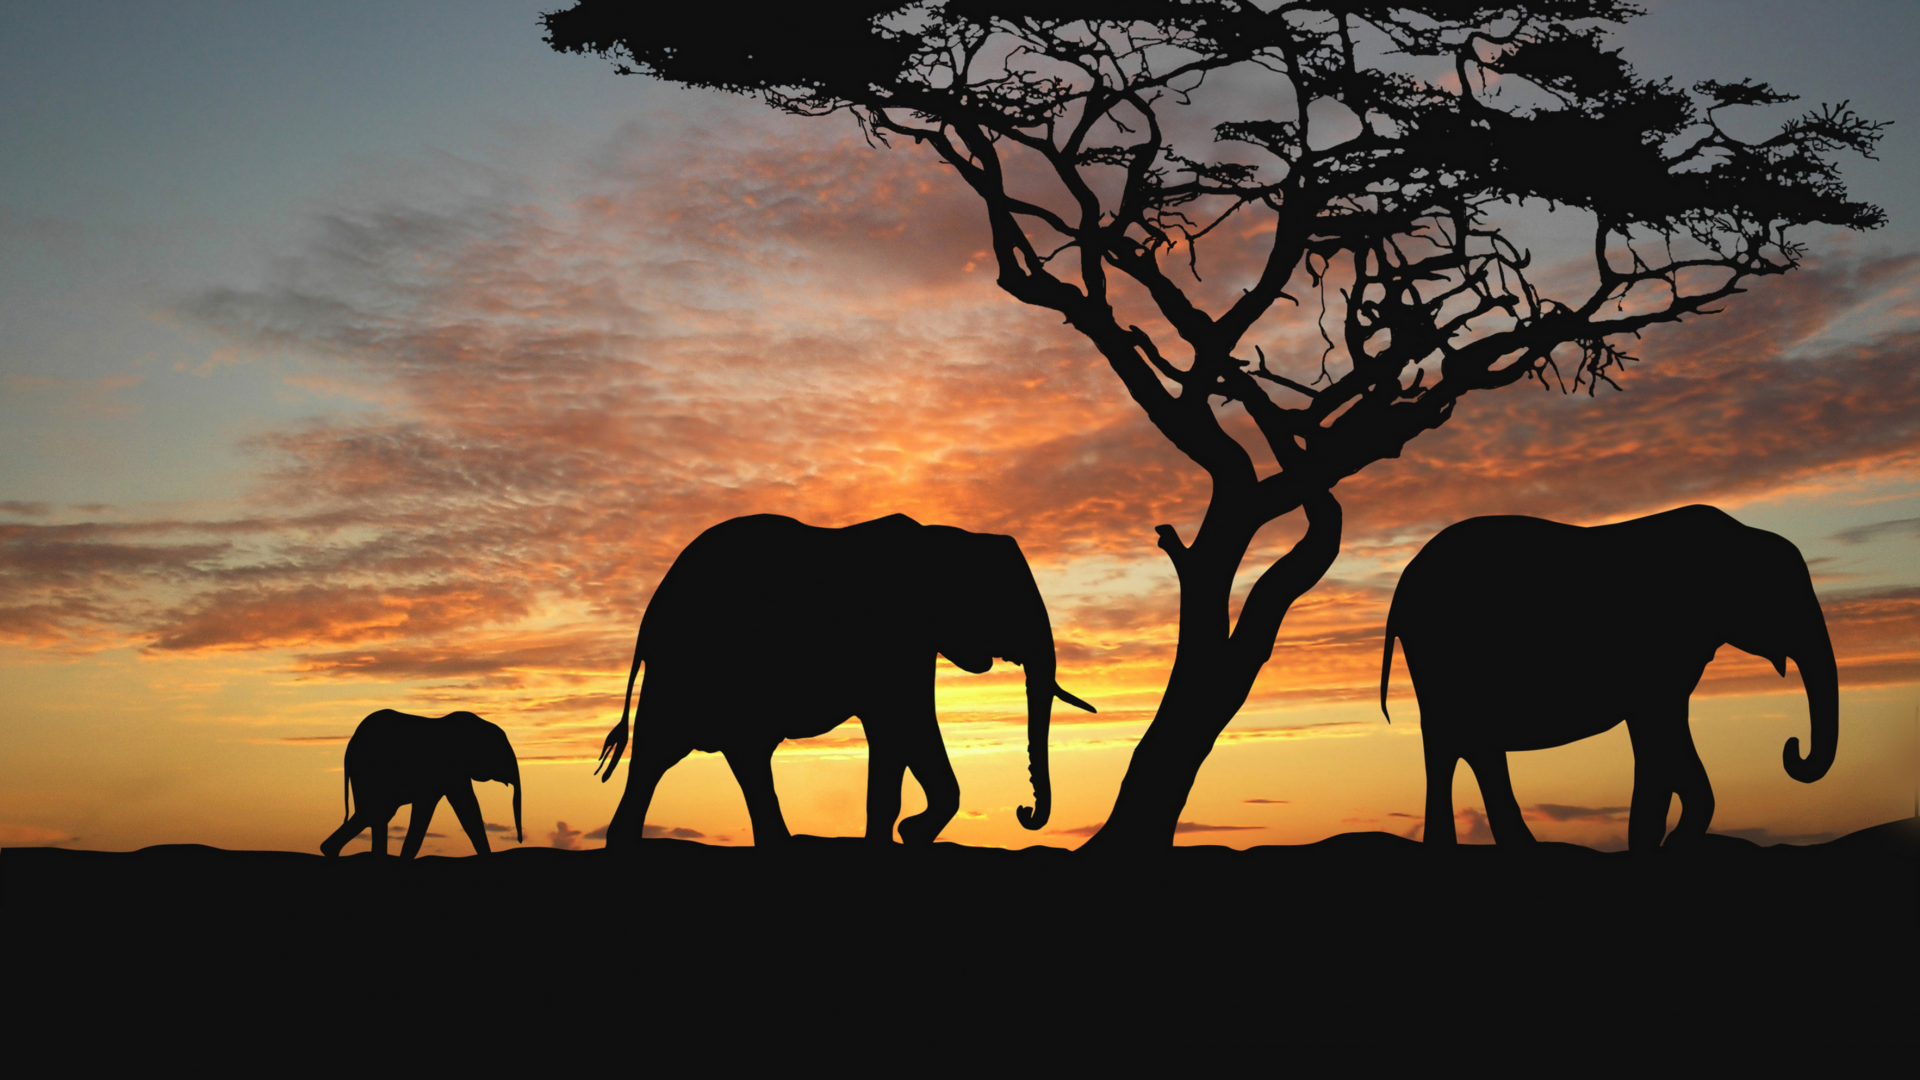 животные, саванна, слоны, закат солнца, африка, деревья, вечер